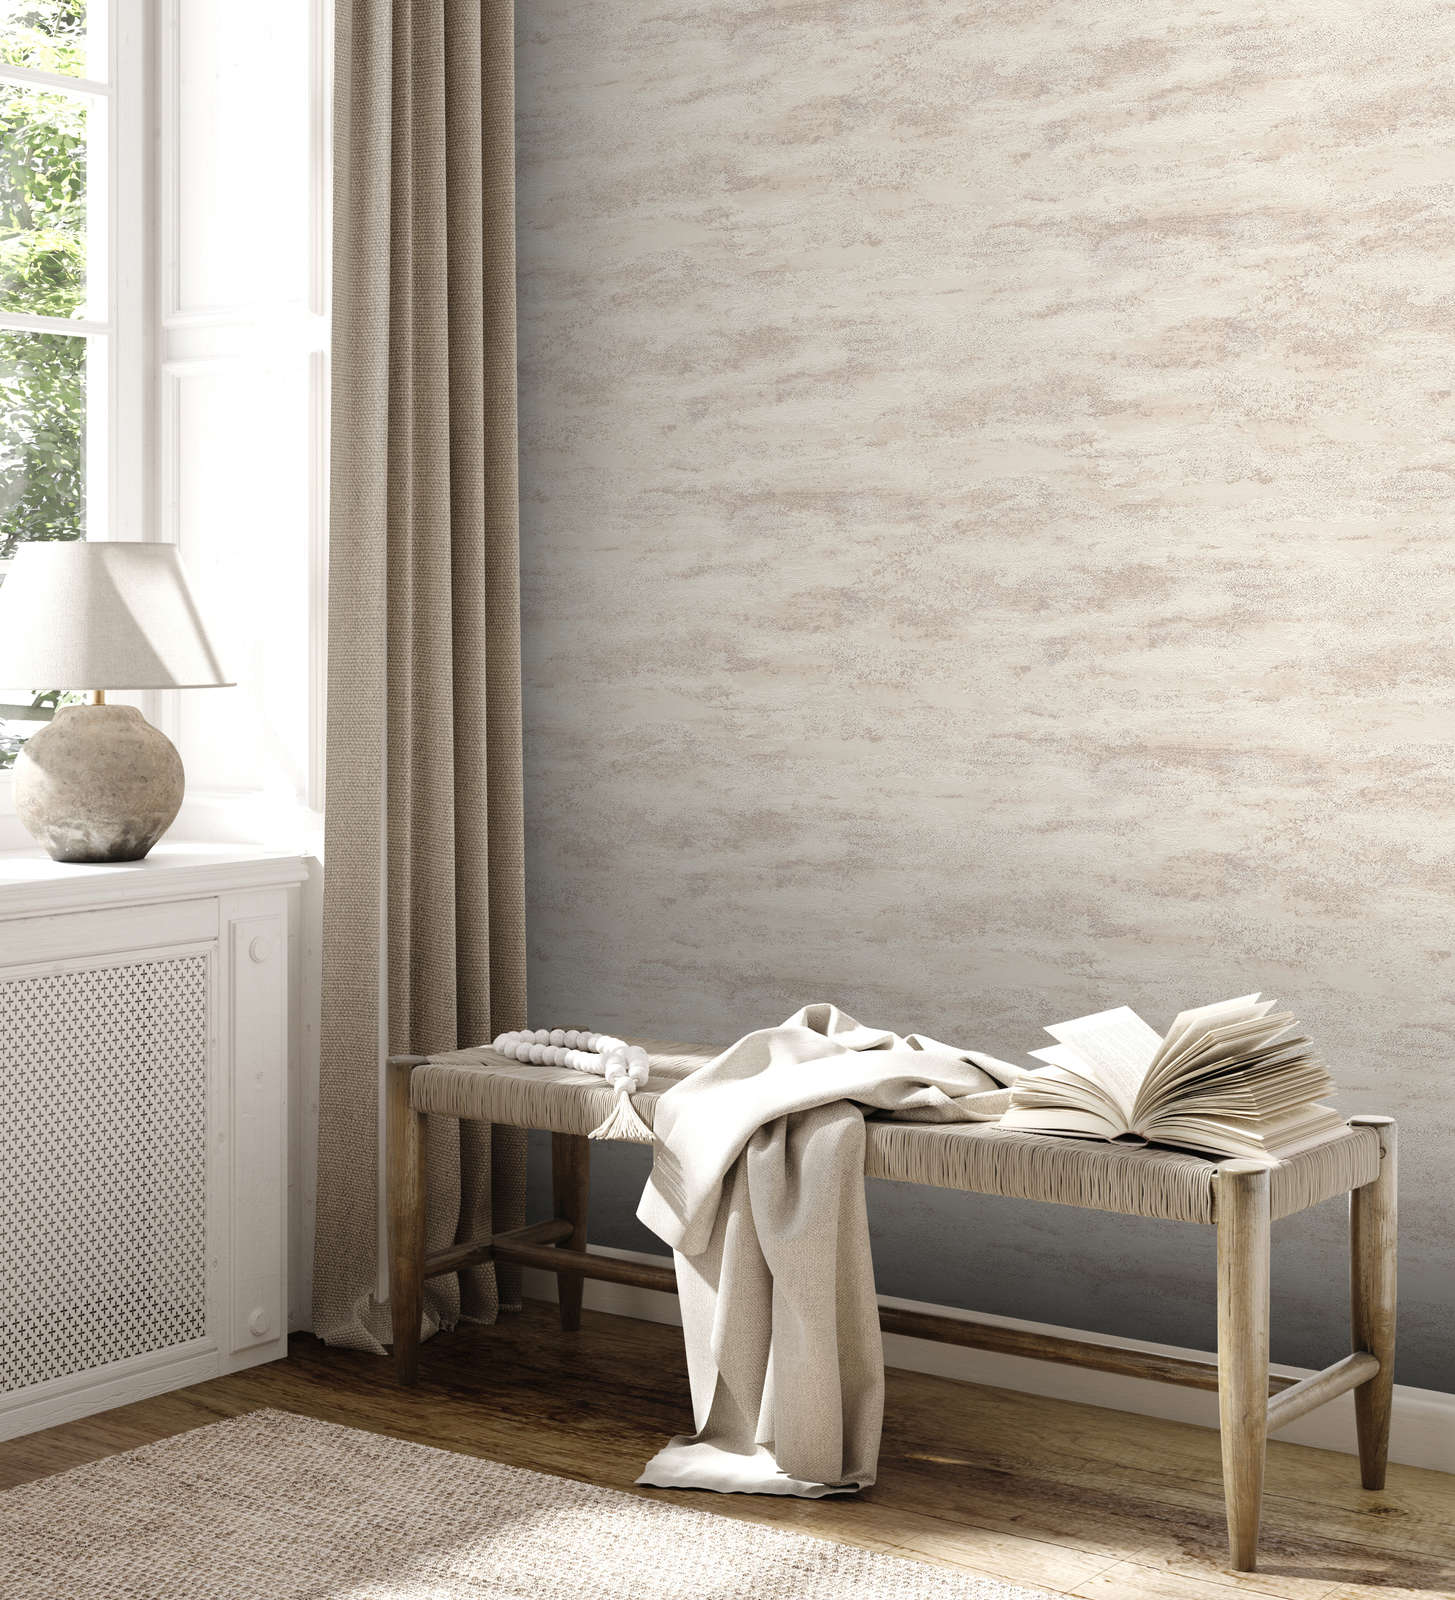             Mottled non-woven wallpaper with wave pattern & light glitter - cream
        